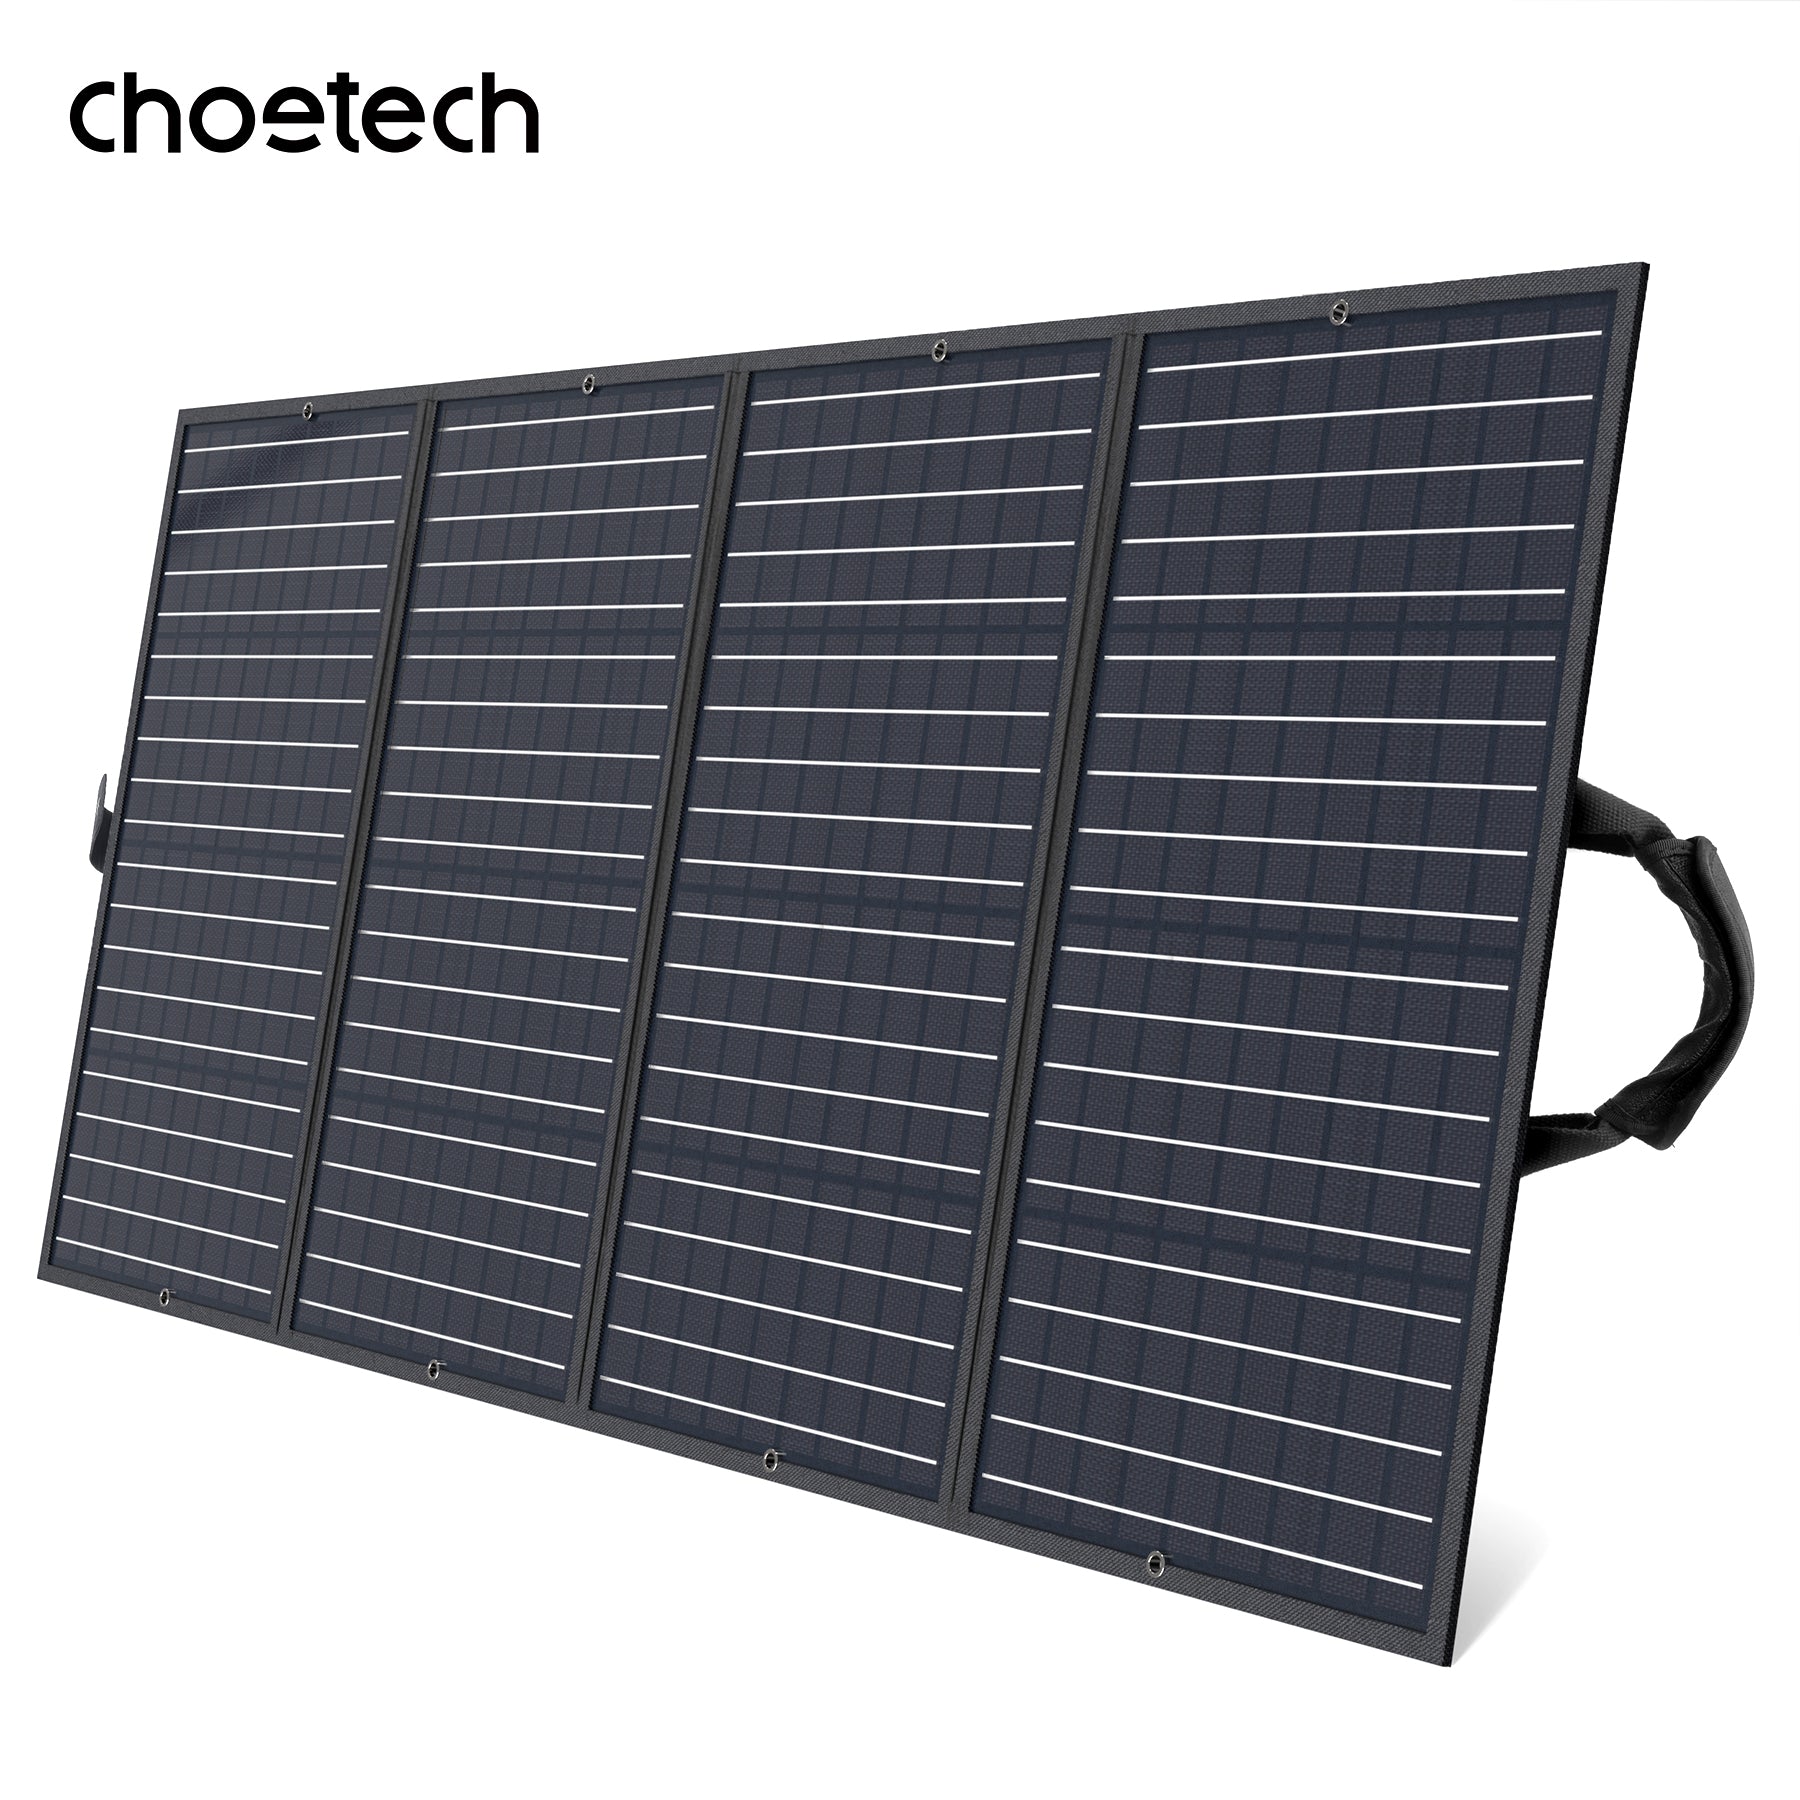 SC010 Choetech 160W Foldable Solar Charger